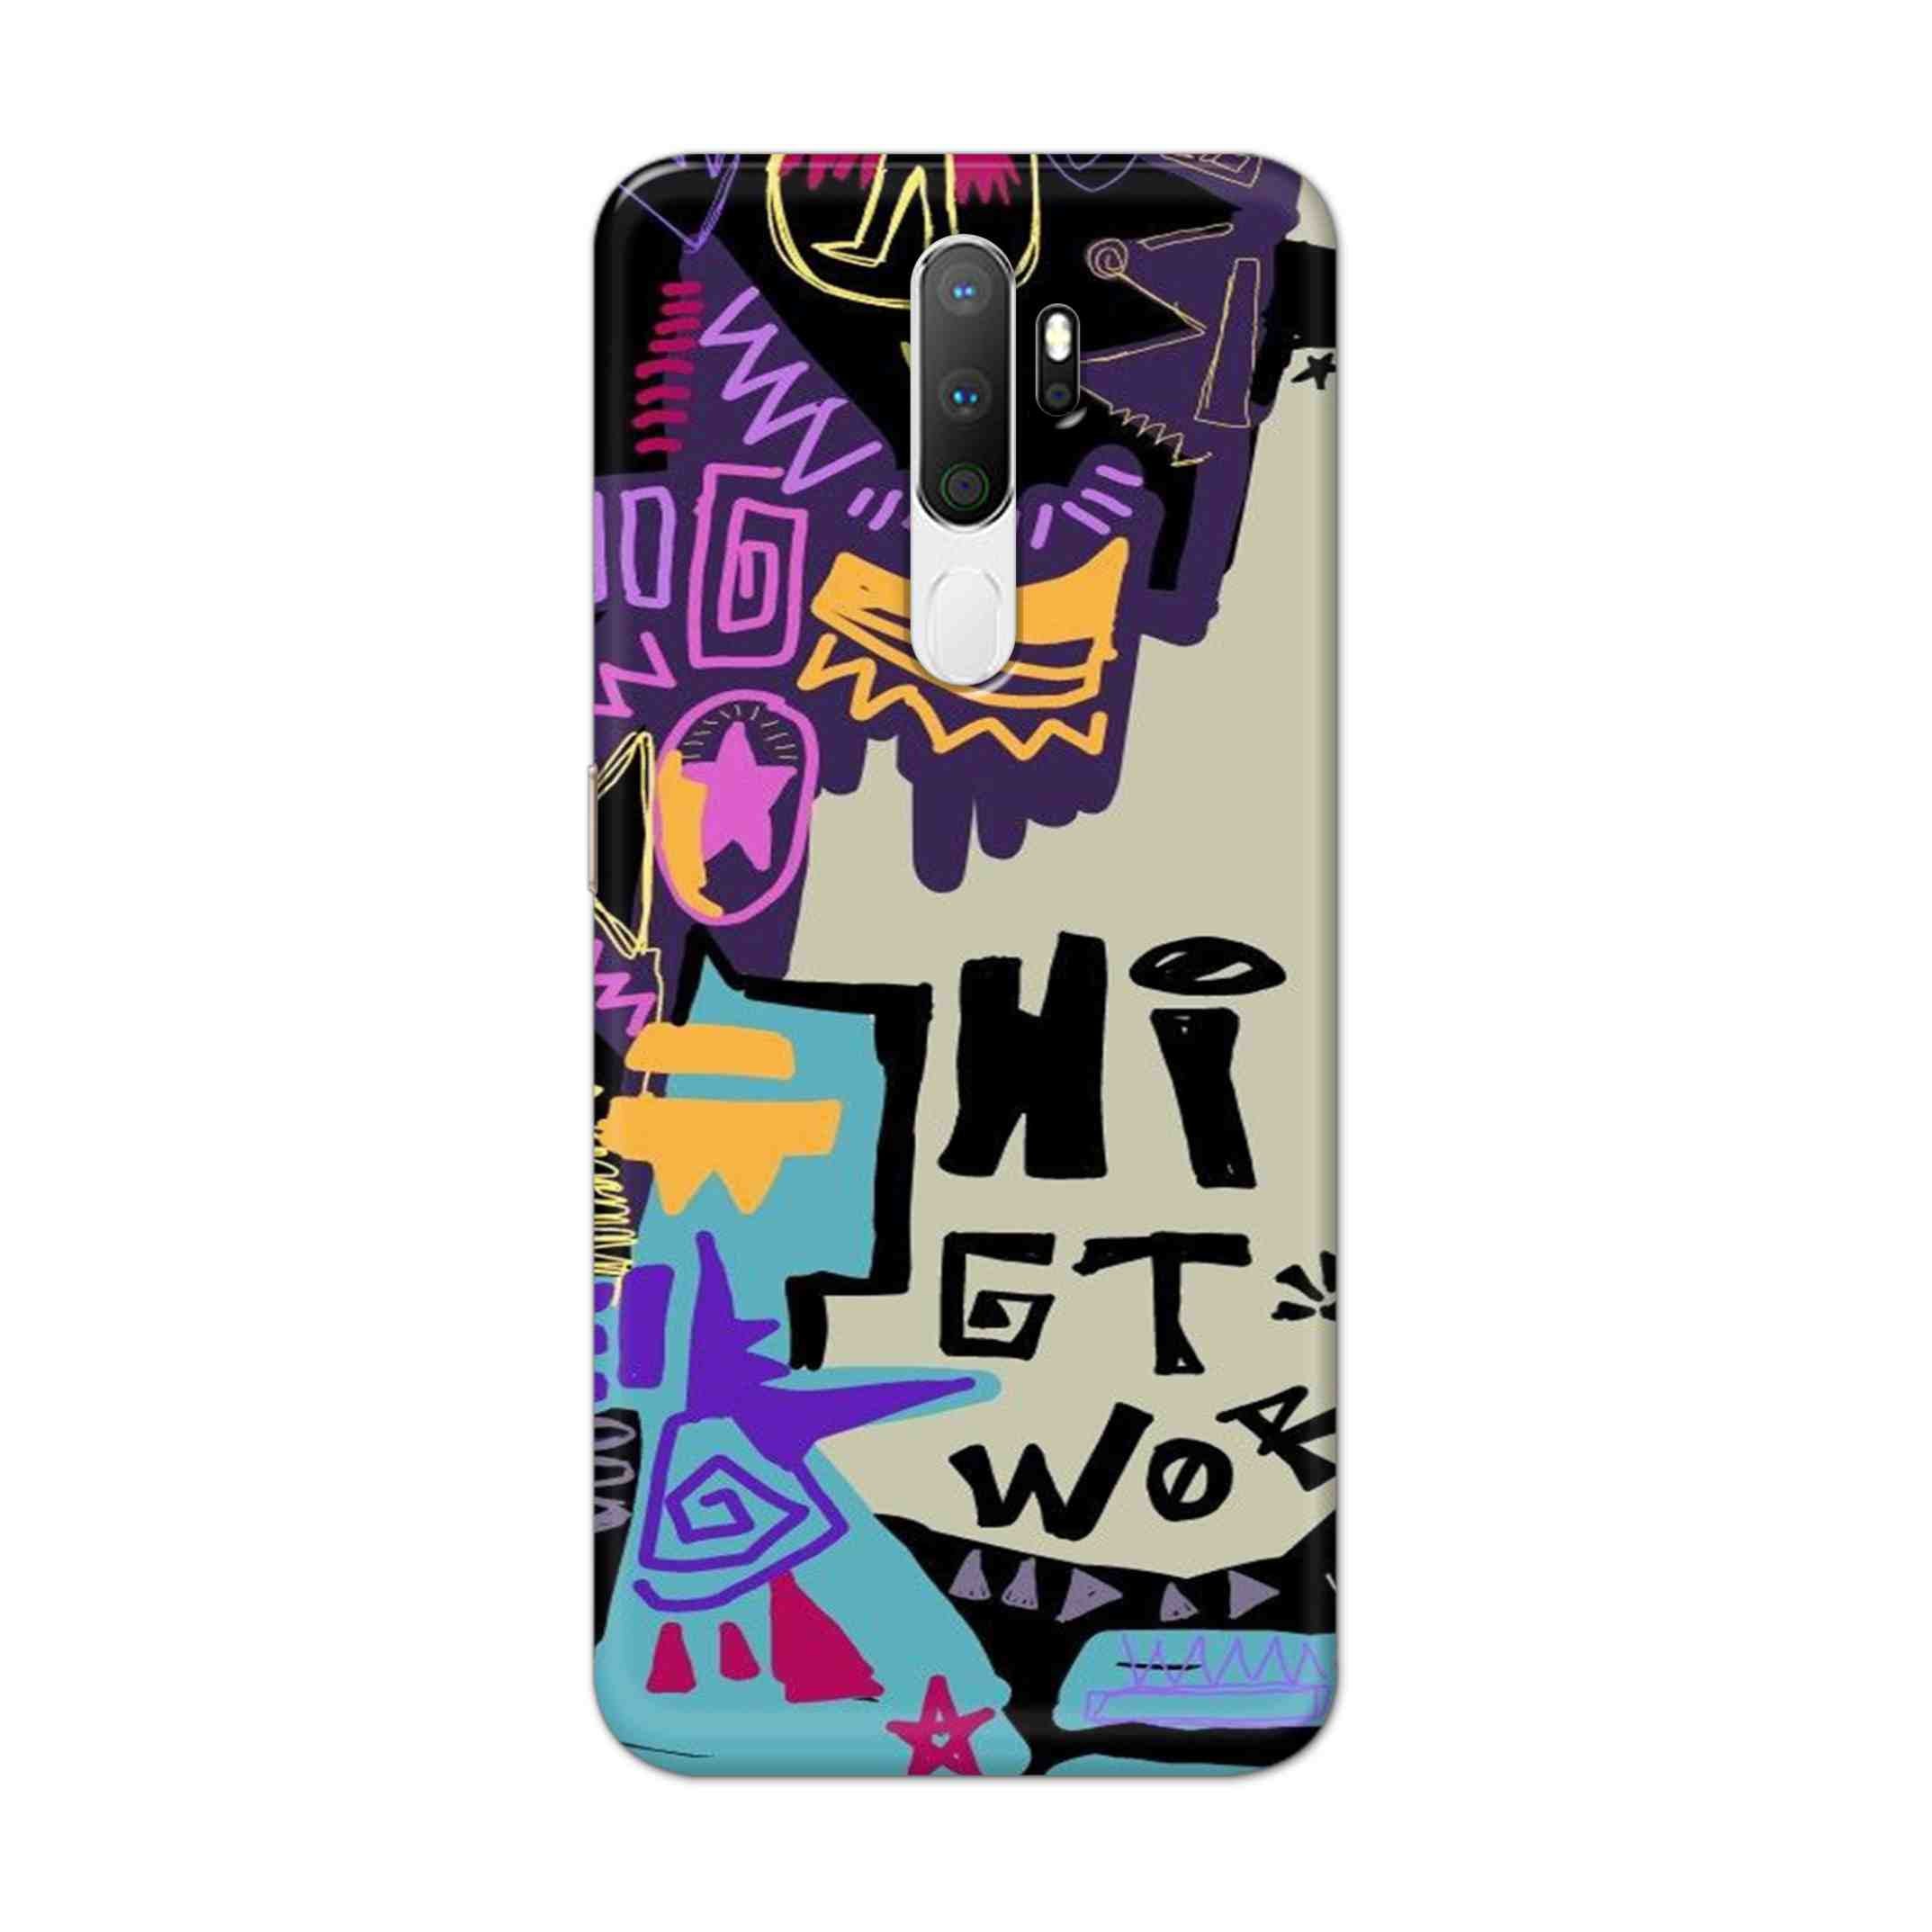 Buy Hi Gt World Hard Back Mobile Phone Case Cover For Oppo A5 (2020) Online